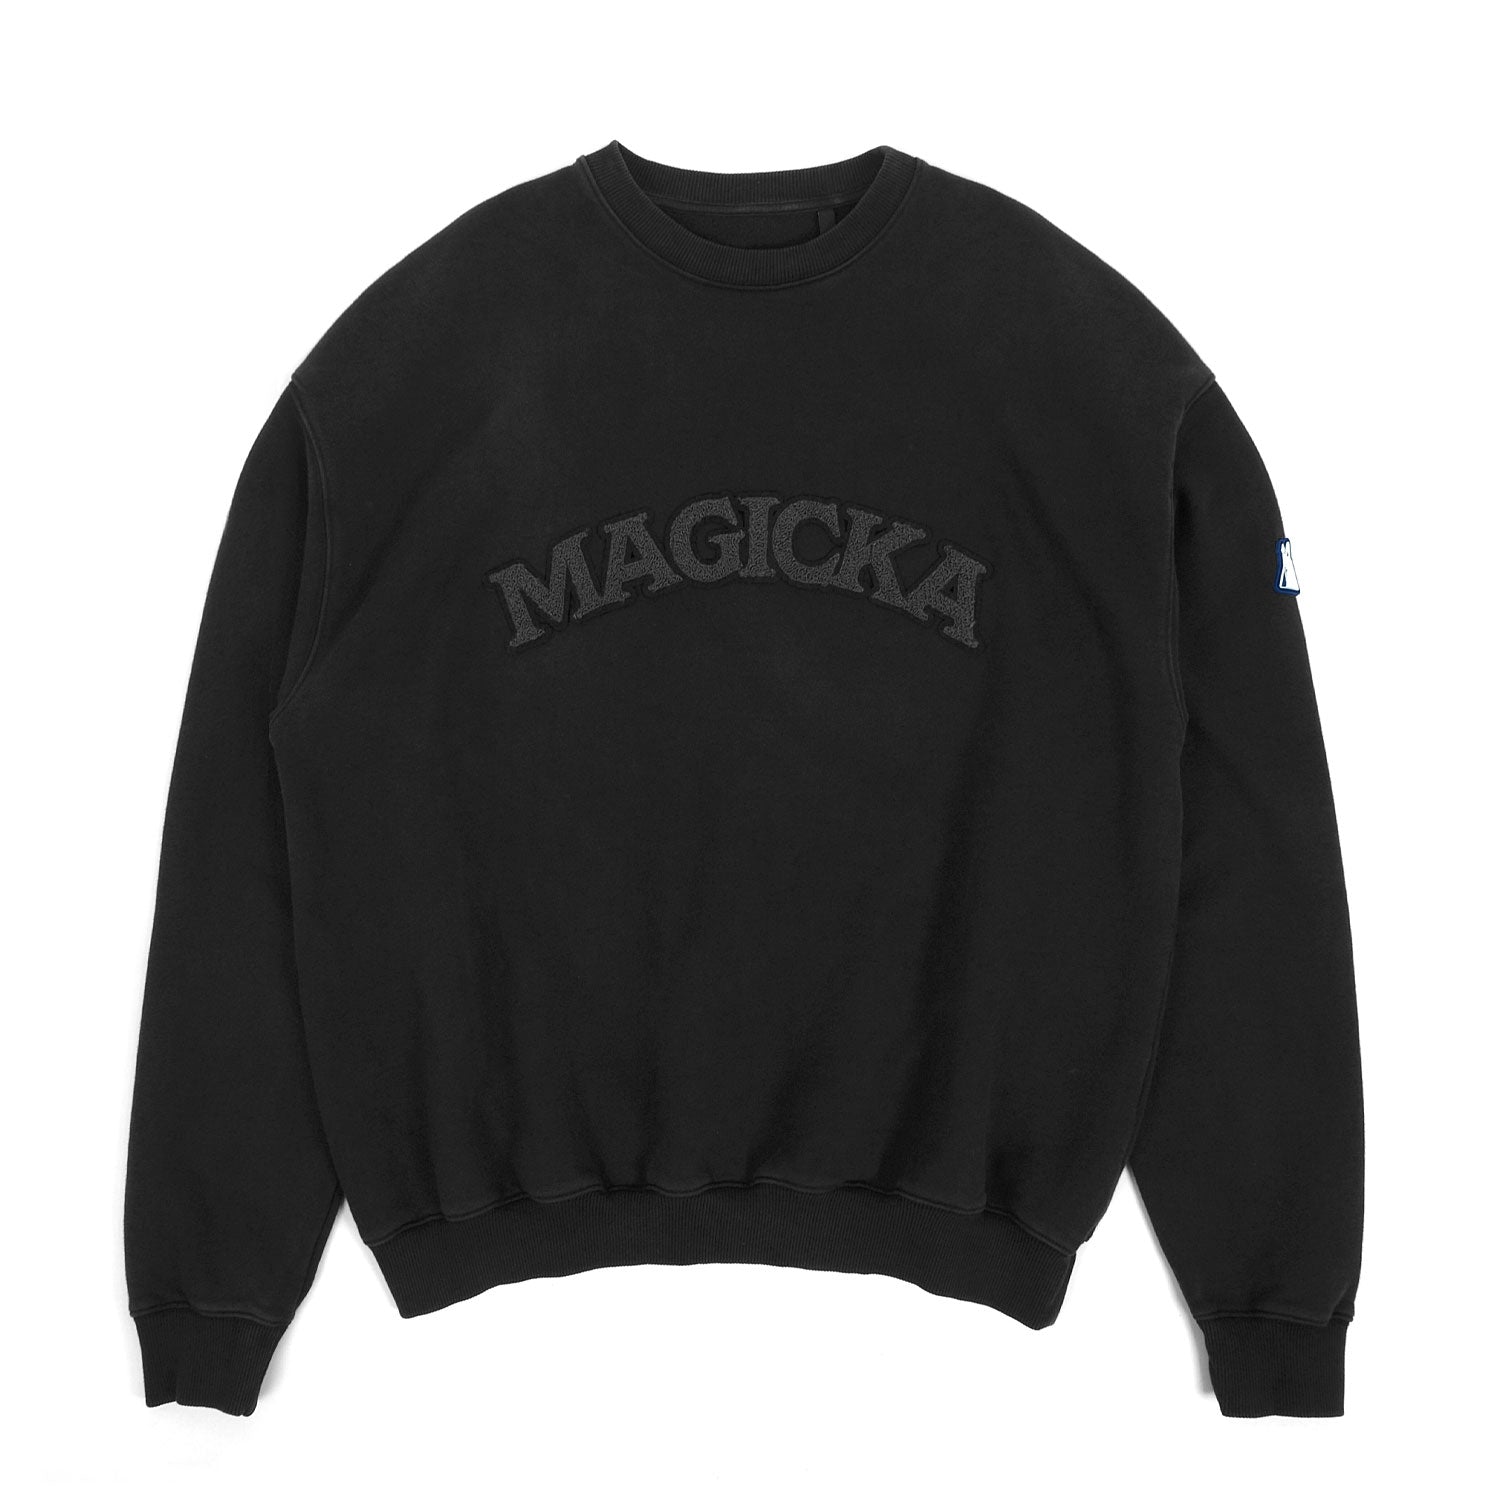 "Magicka" Crewneck Sweatshirt